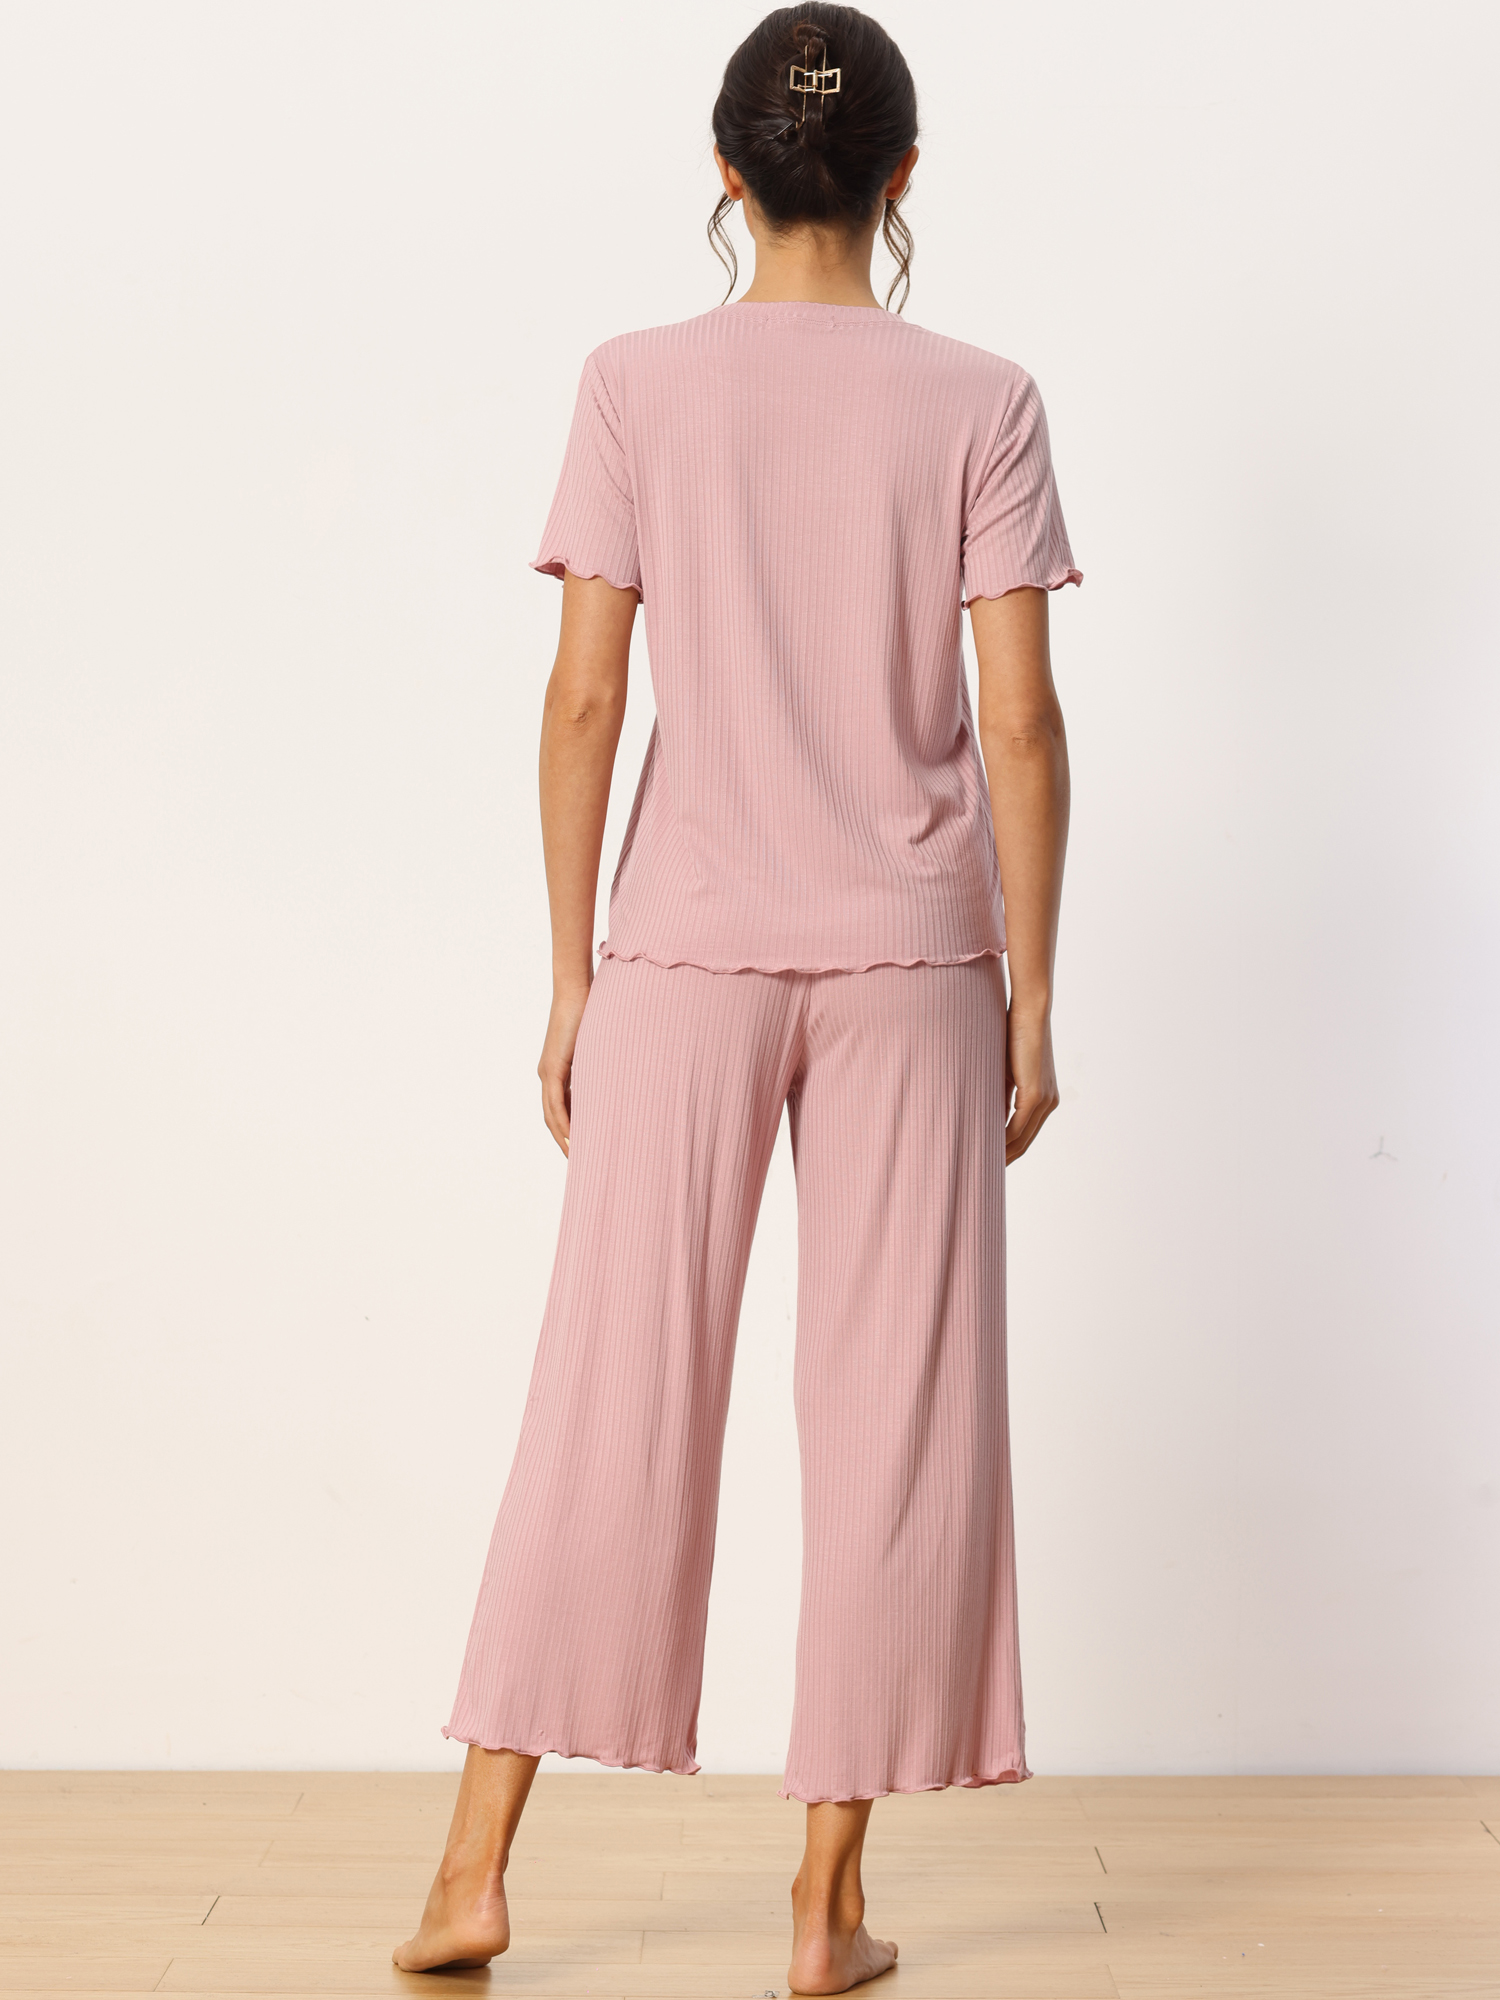 Unique Bargains Womens Sleepwear Round Neck Soft Knit Short Sleeve Shirt Capri Pajamas Set